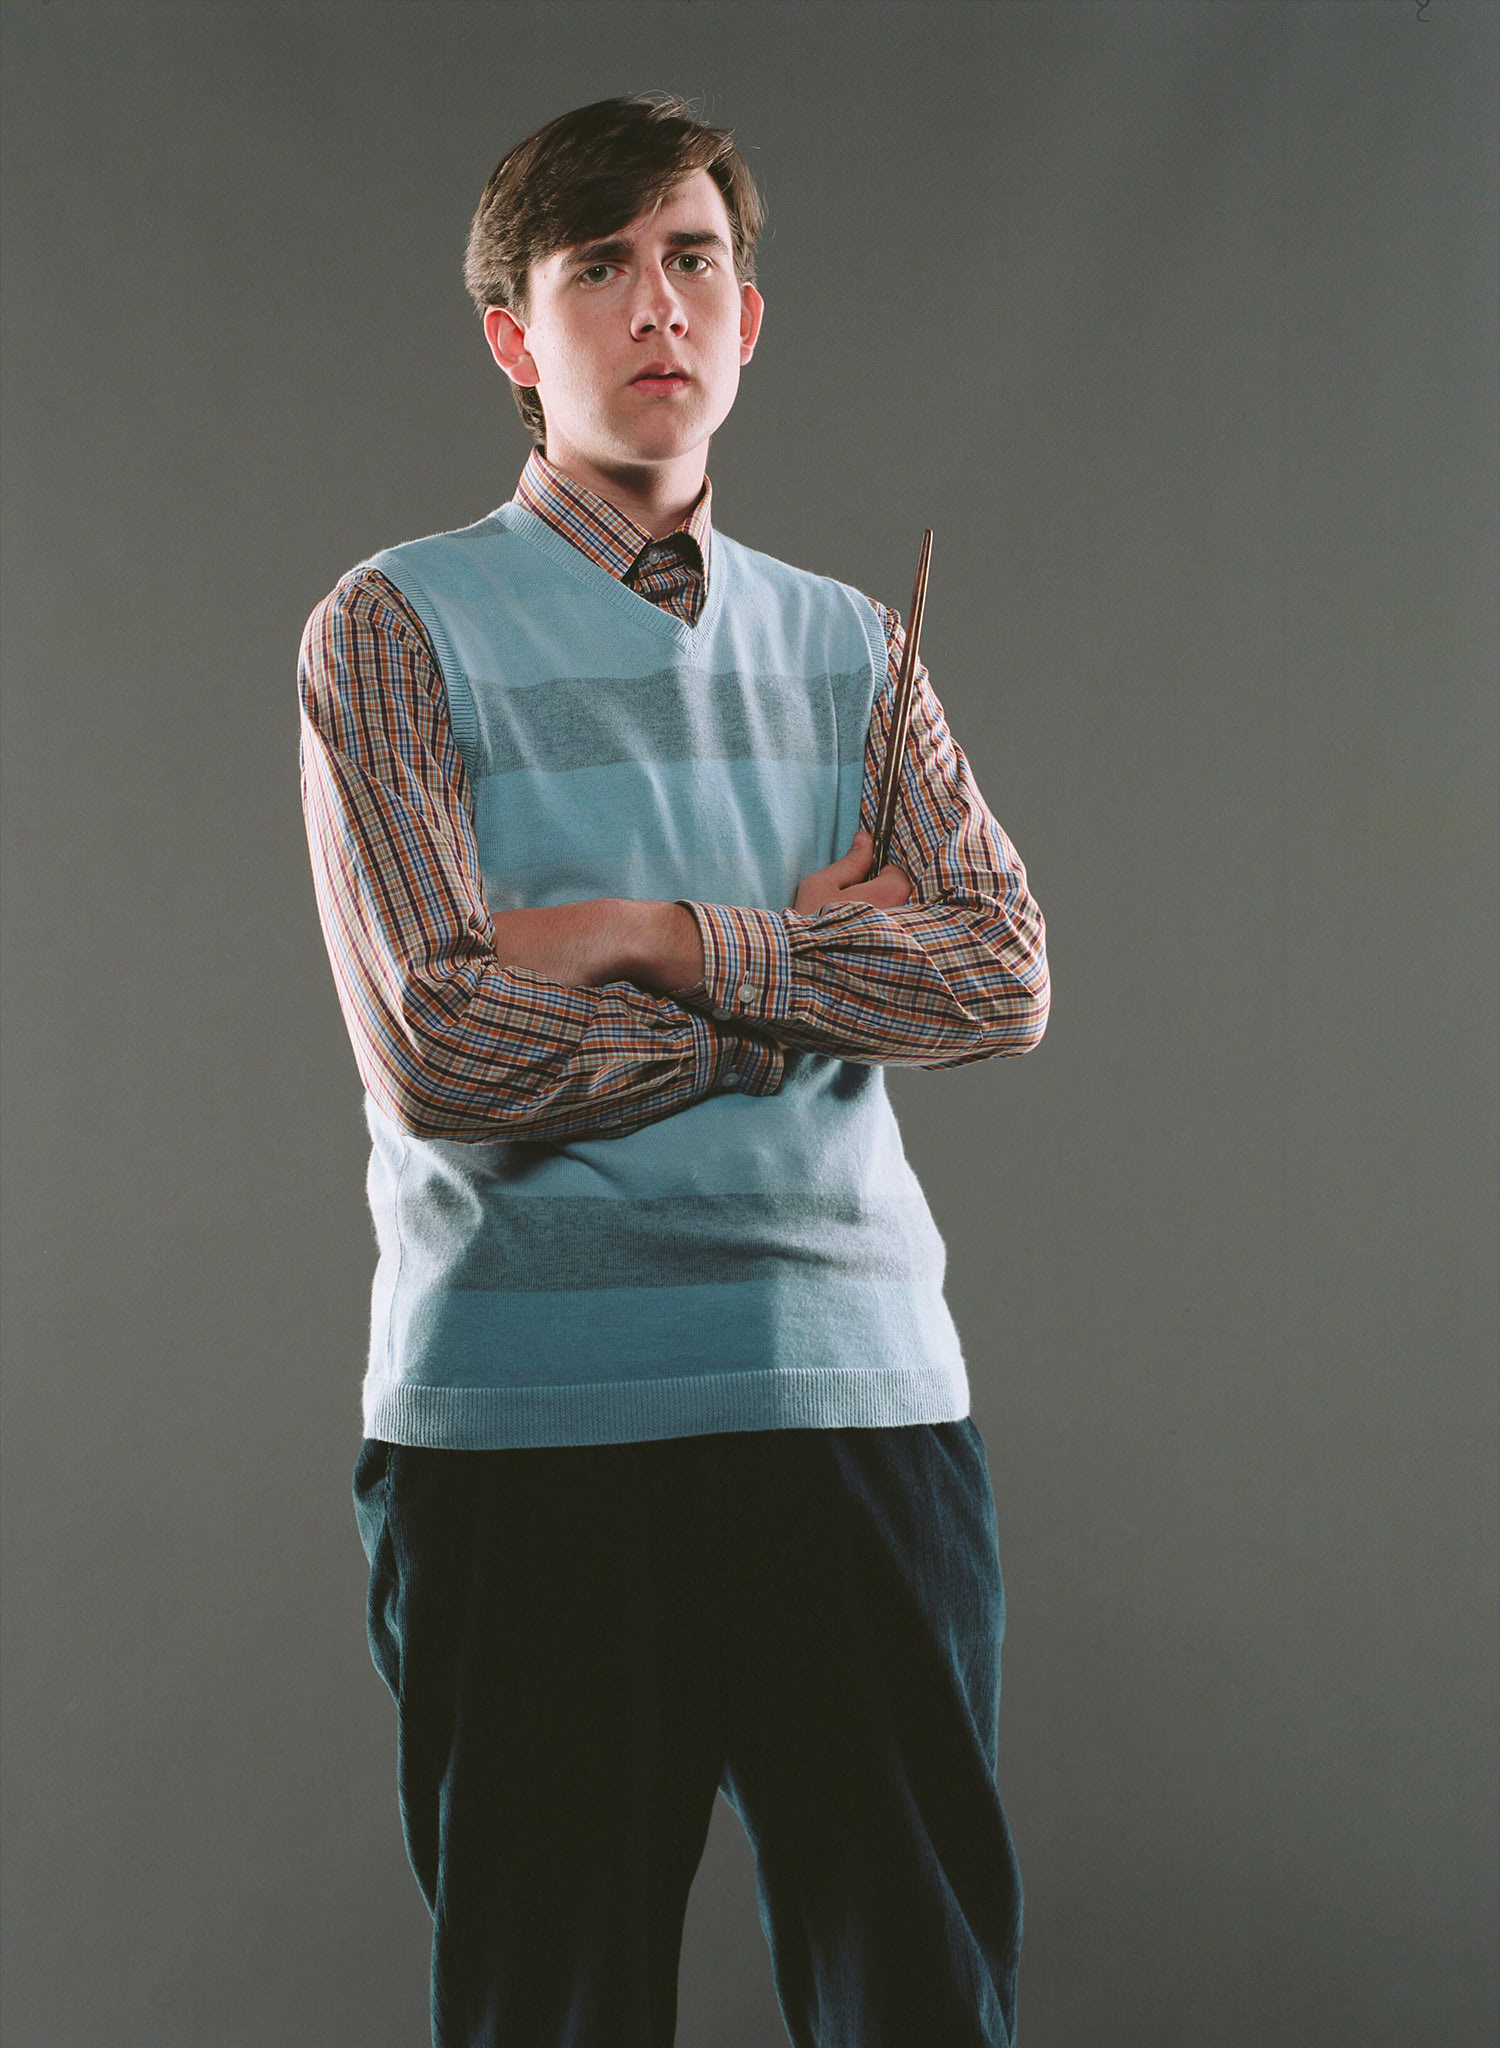 Portrait of Neville Longbottom